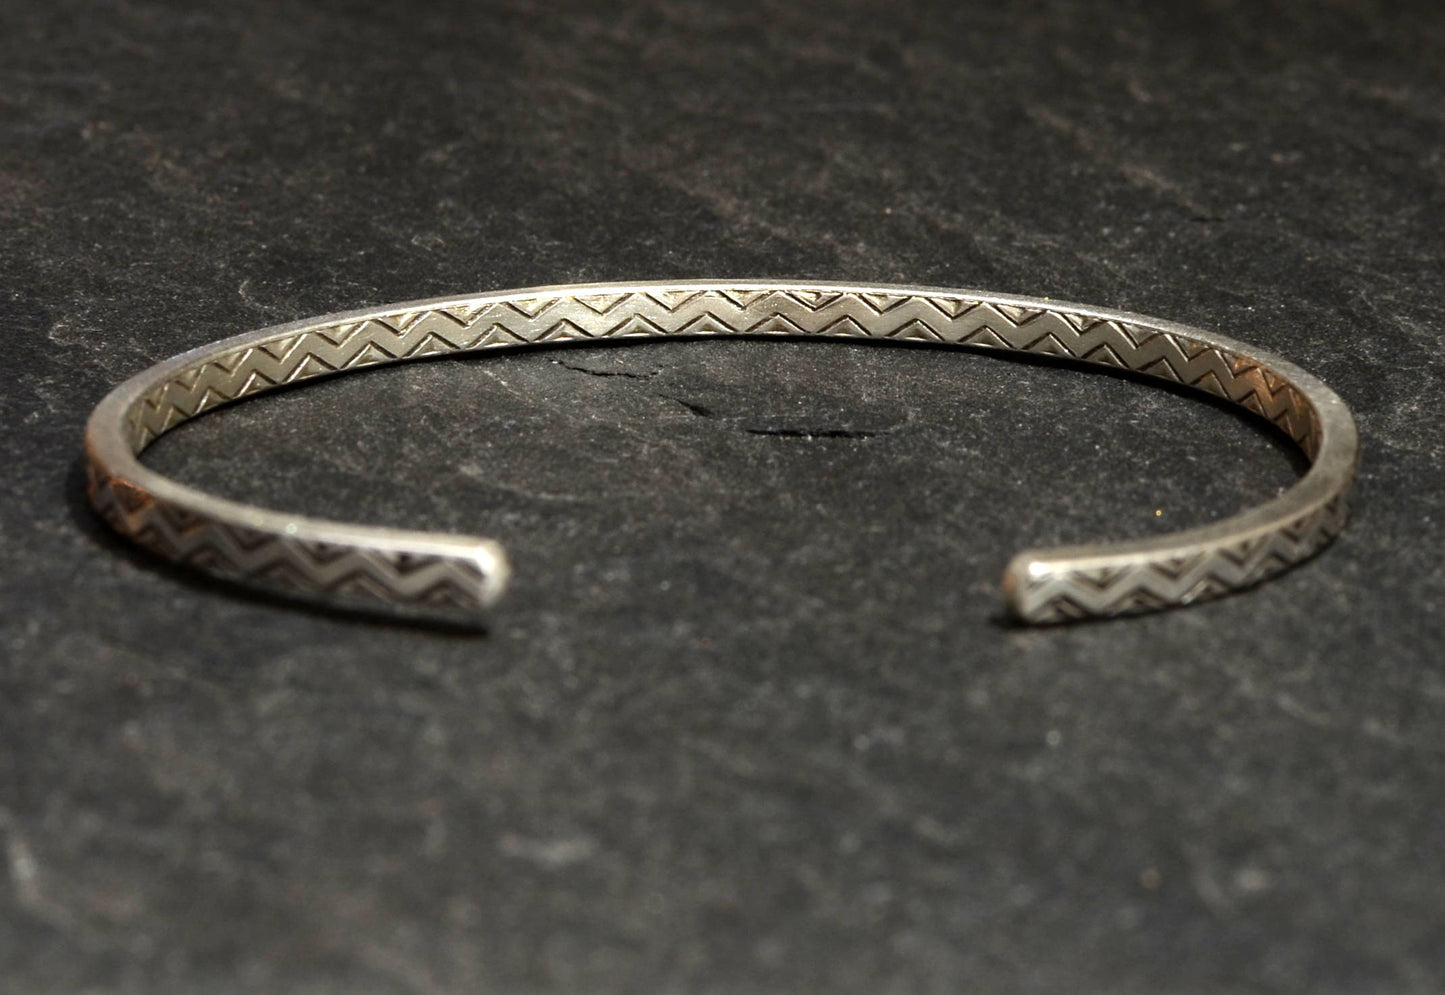 Dainty Sterling Silver Cuff Bracelet with Zig Zag Pattern - solid 925 BR8832